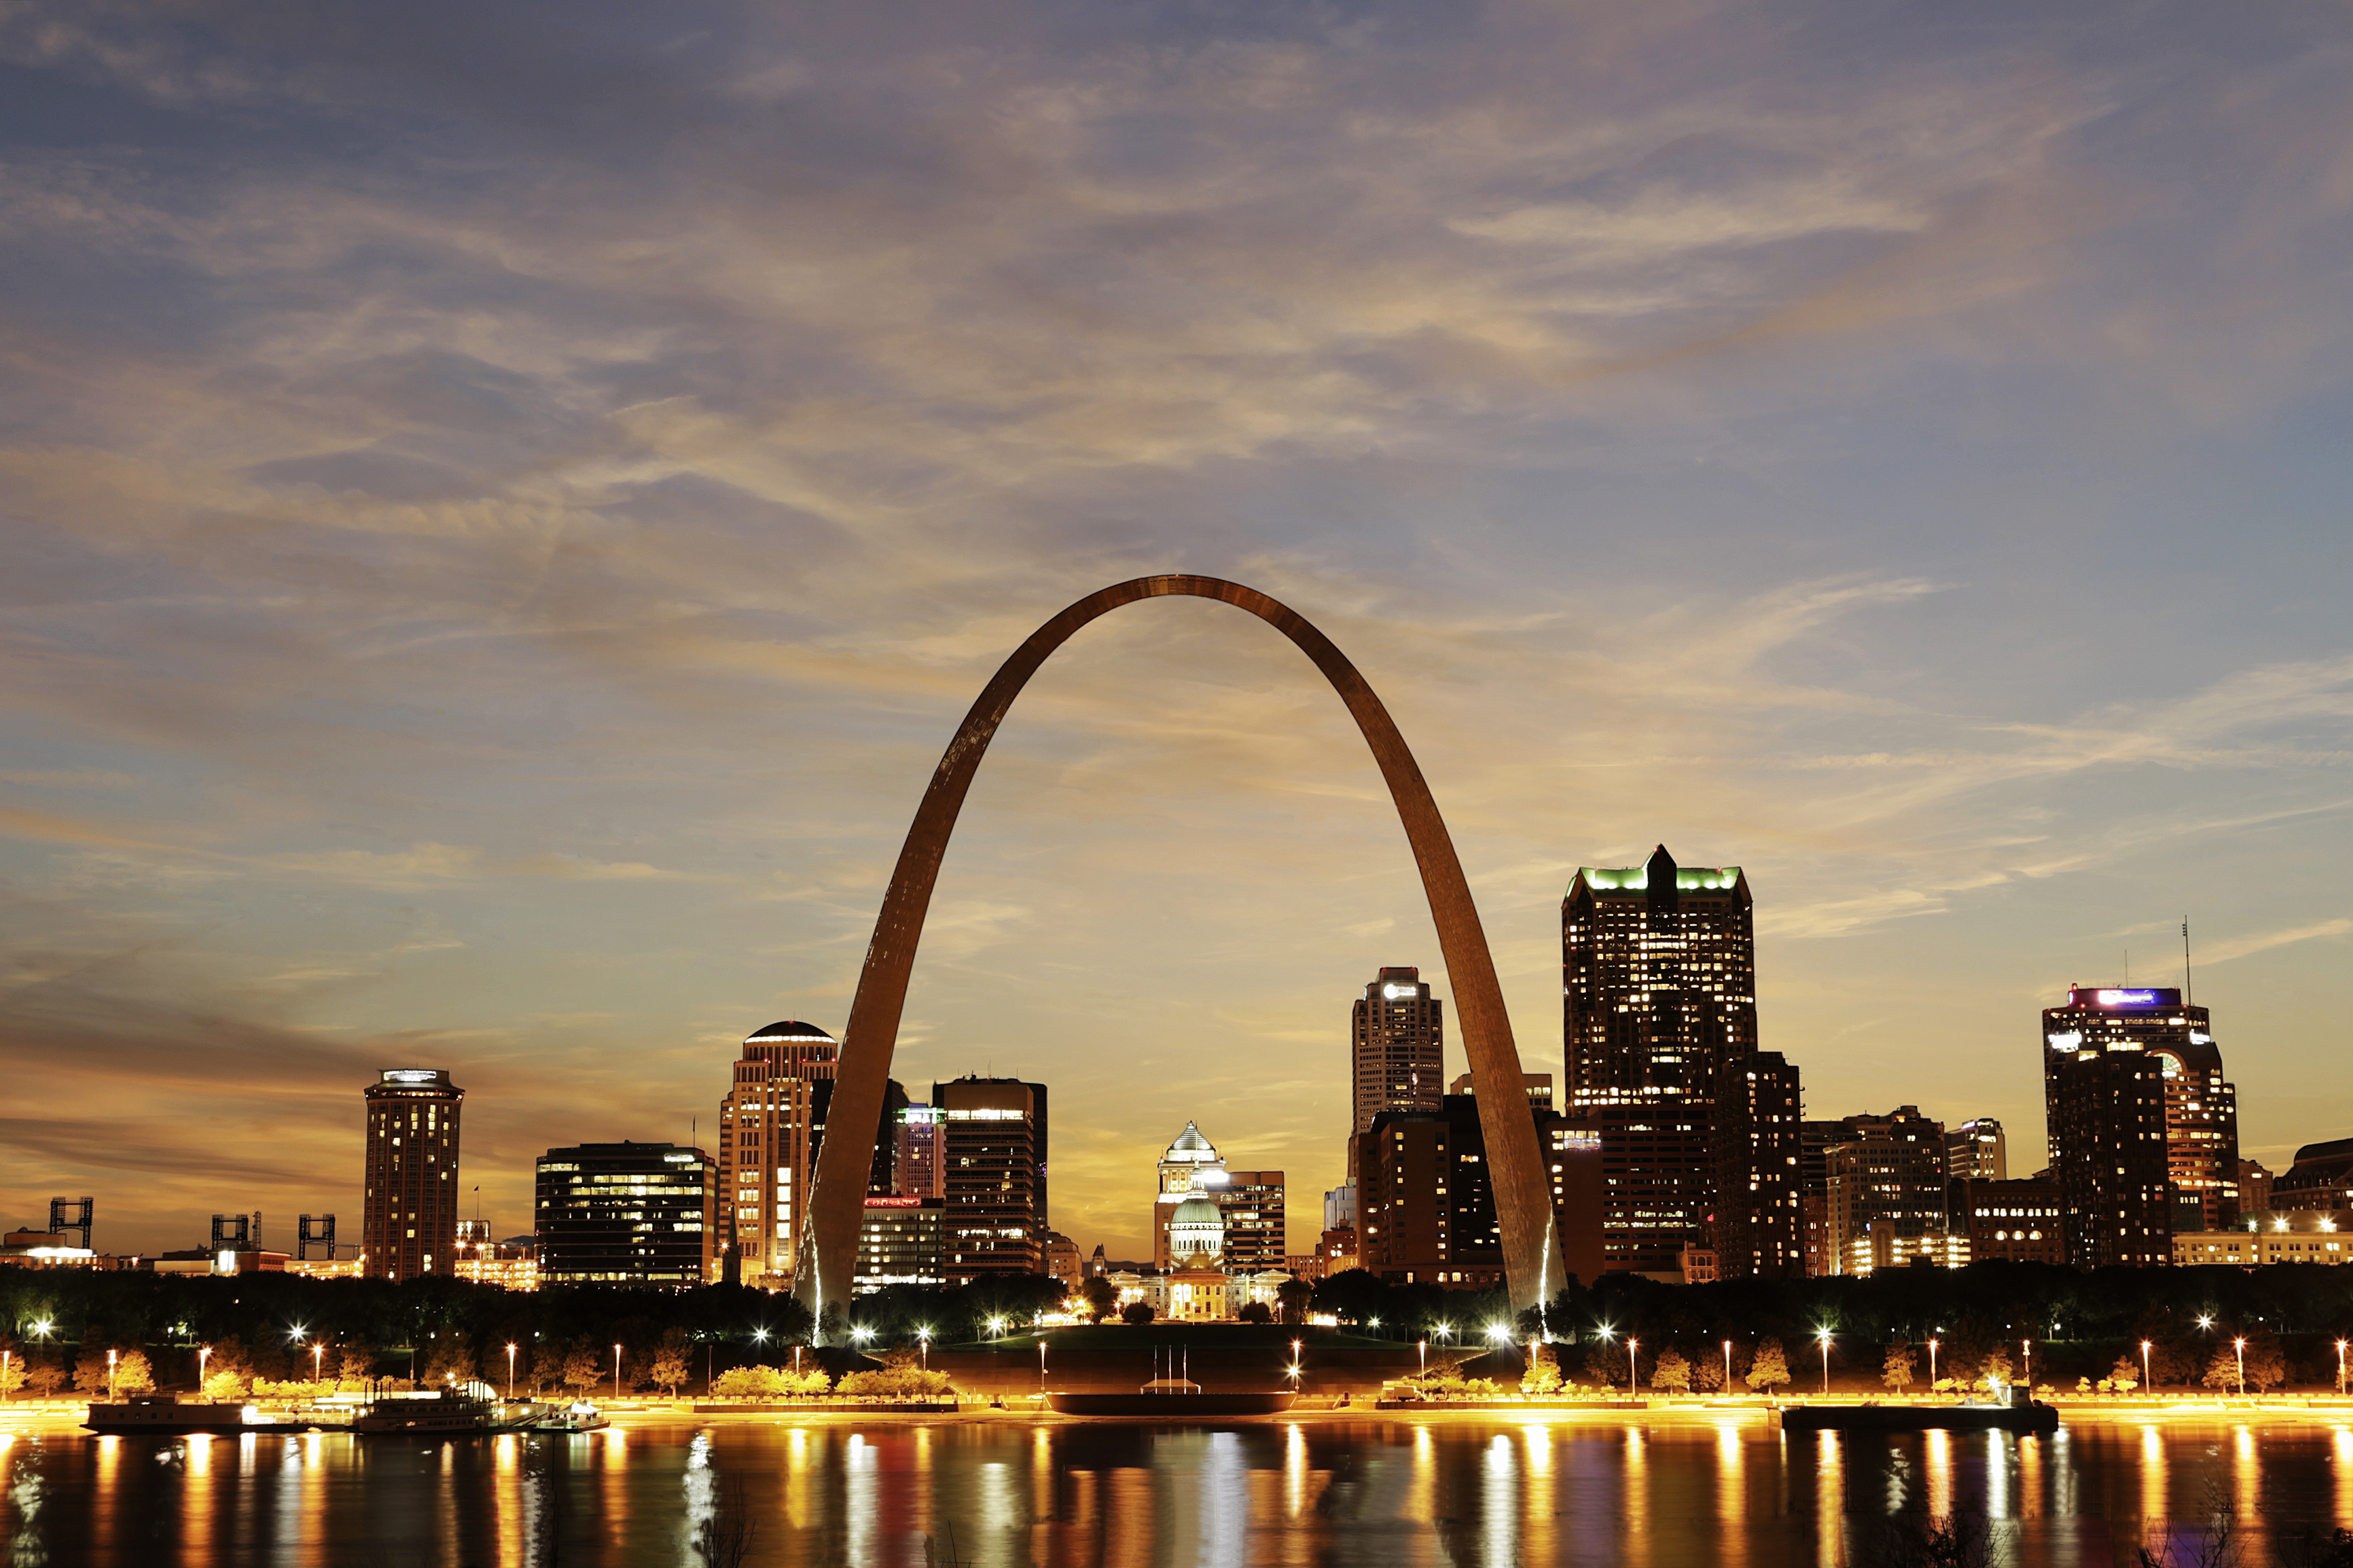 City of St Louis